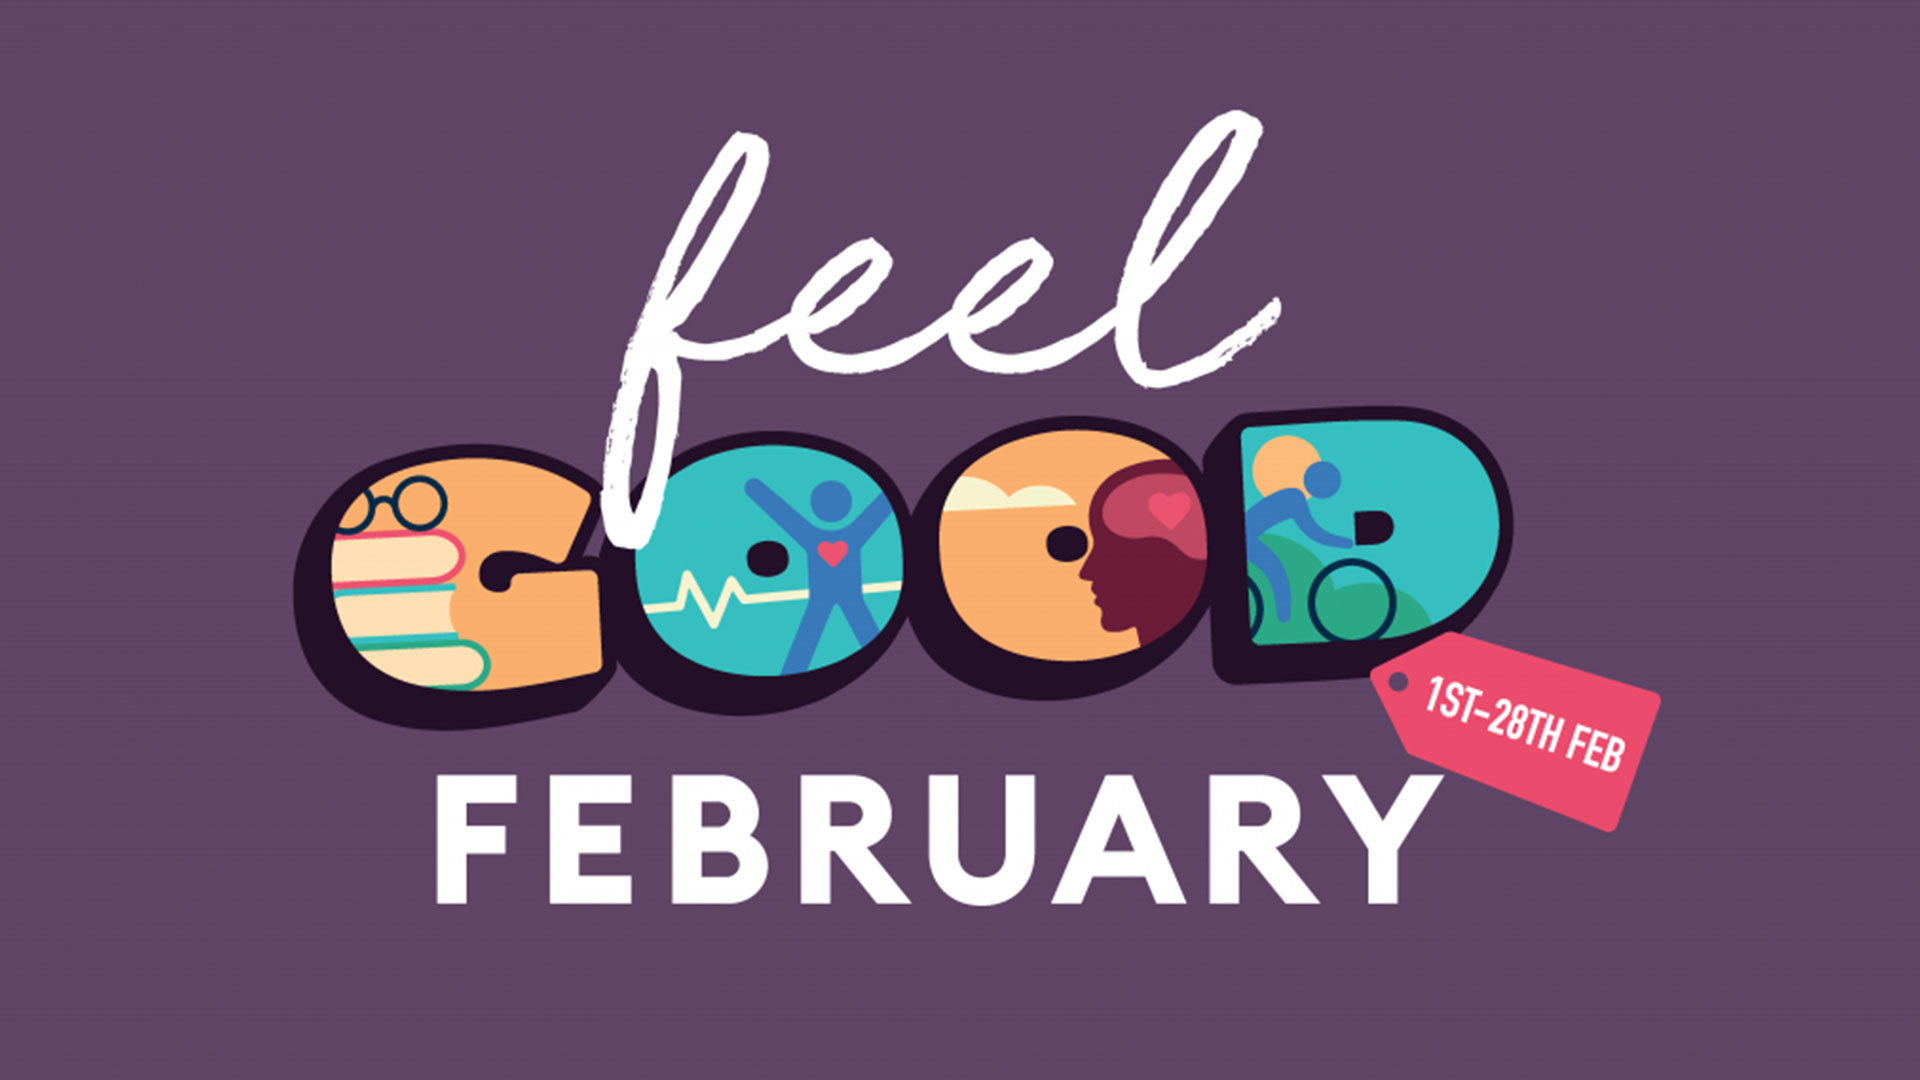 Feel Good February cover